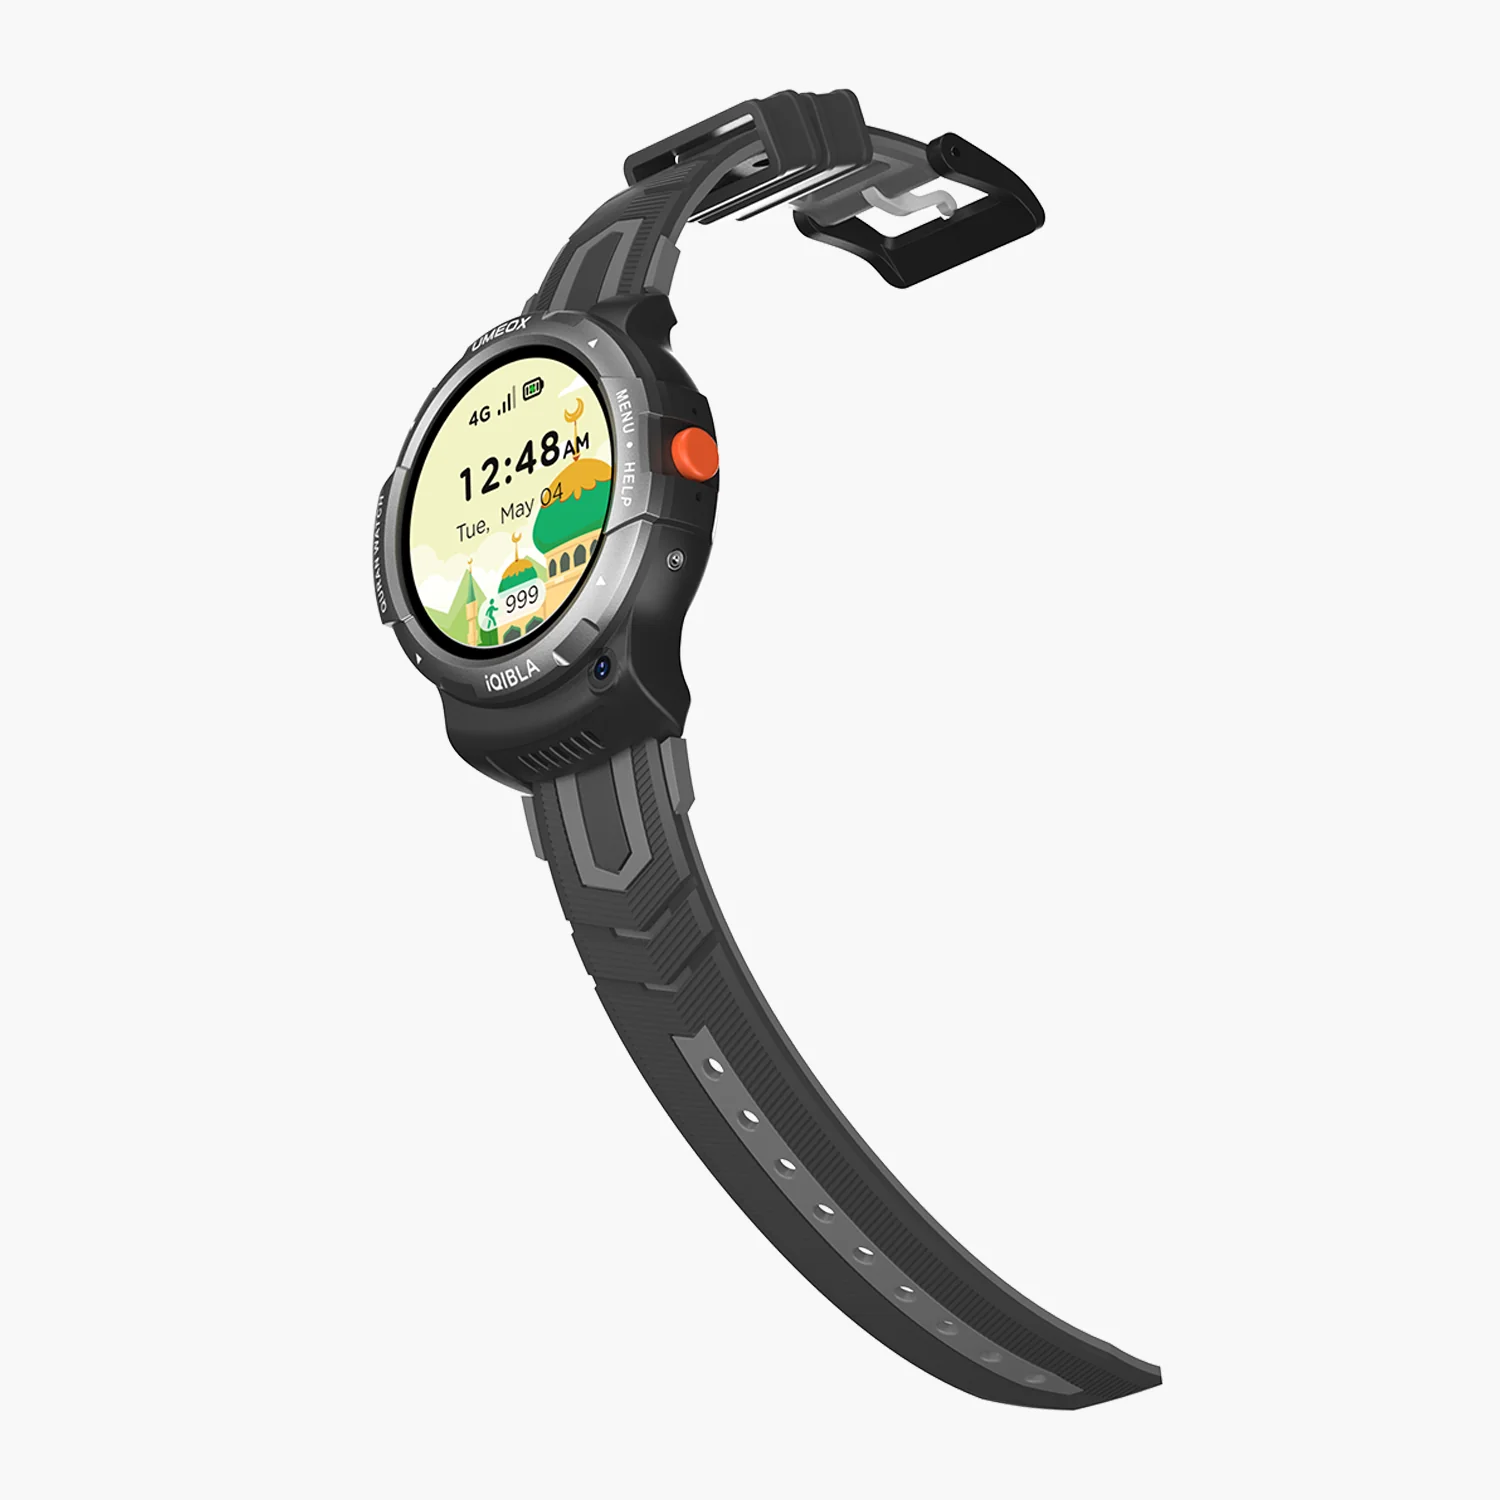 iQibla Qwatch K1s Kids Smart watch - Black